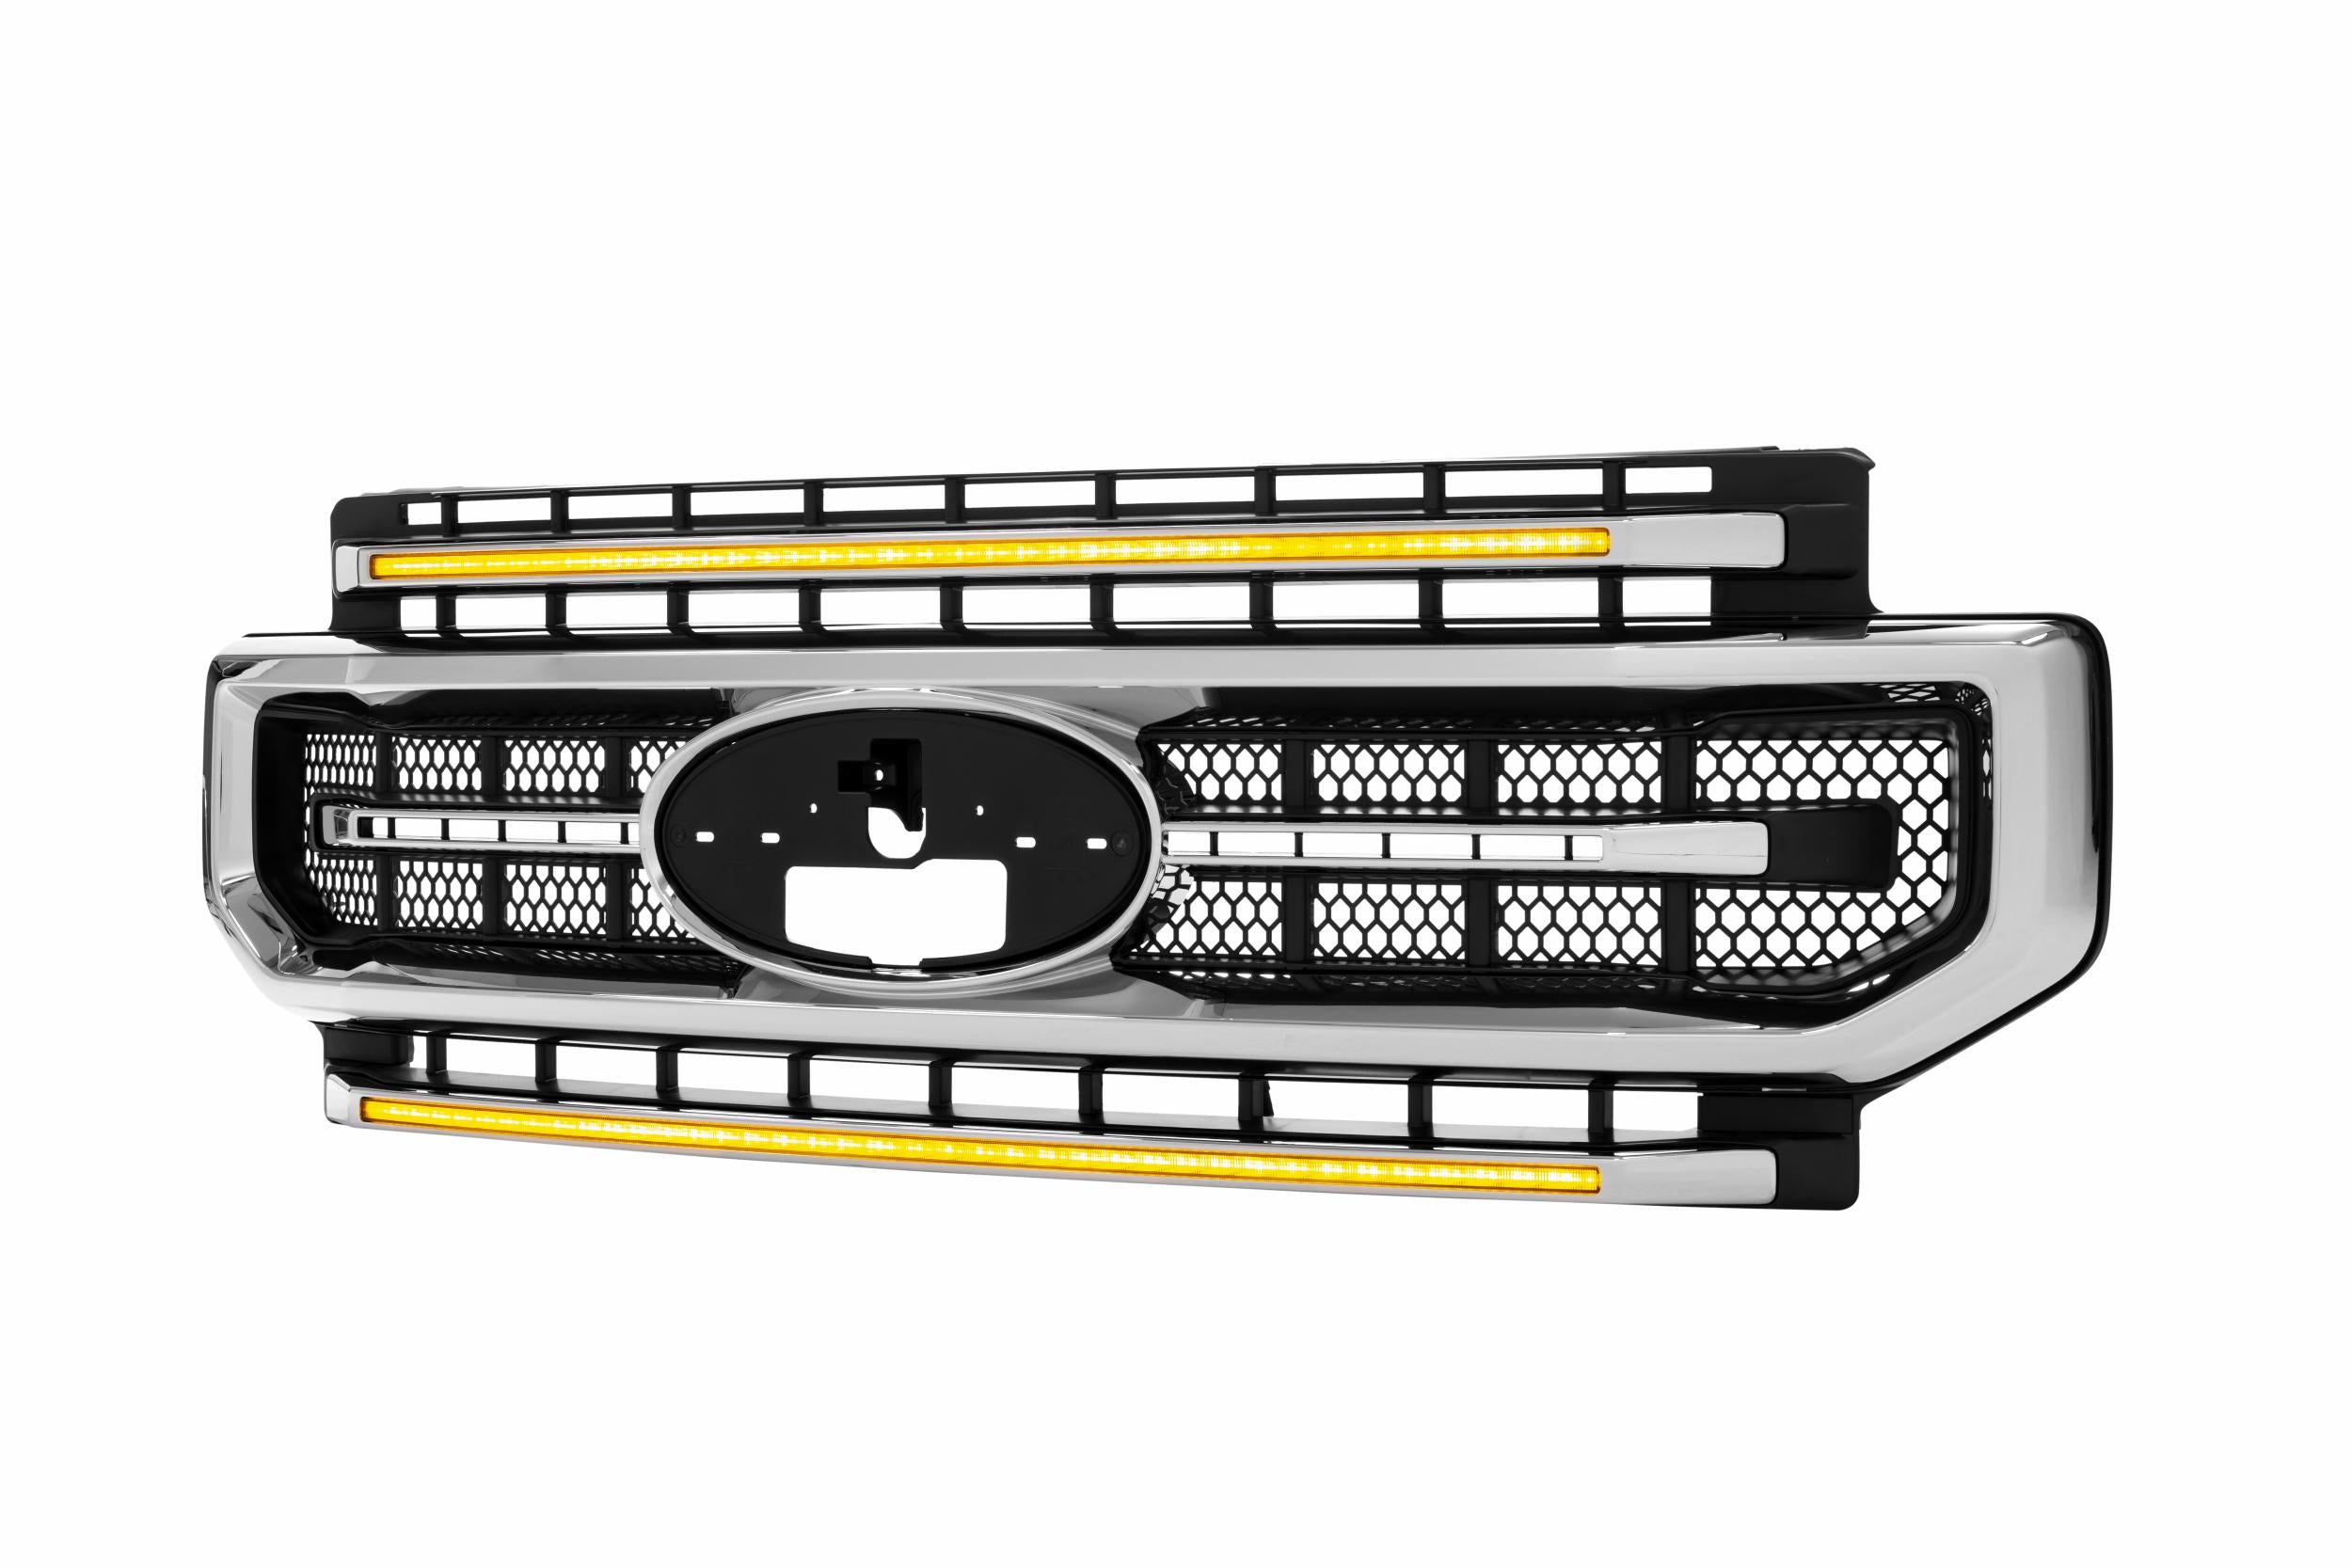 Morimoto XBG LED Grille: Ford Super Duty (20-22) (Chrome Finish / Amber DRL)-XBG13